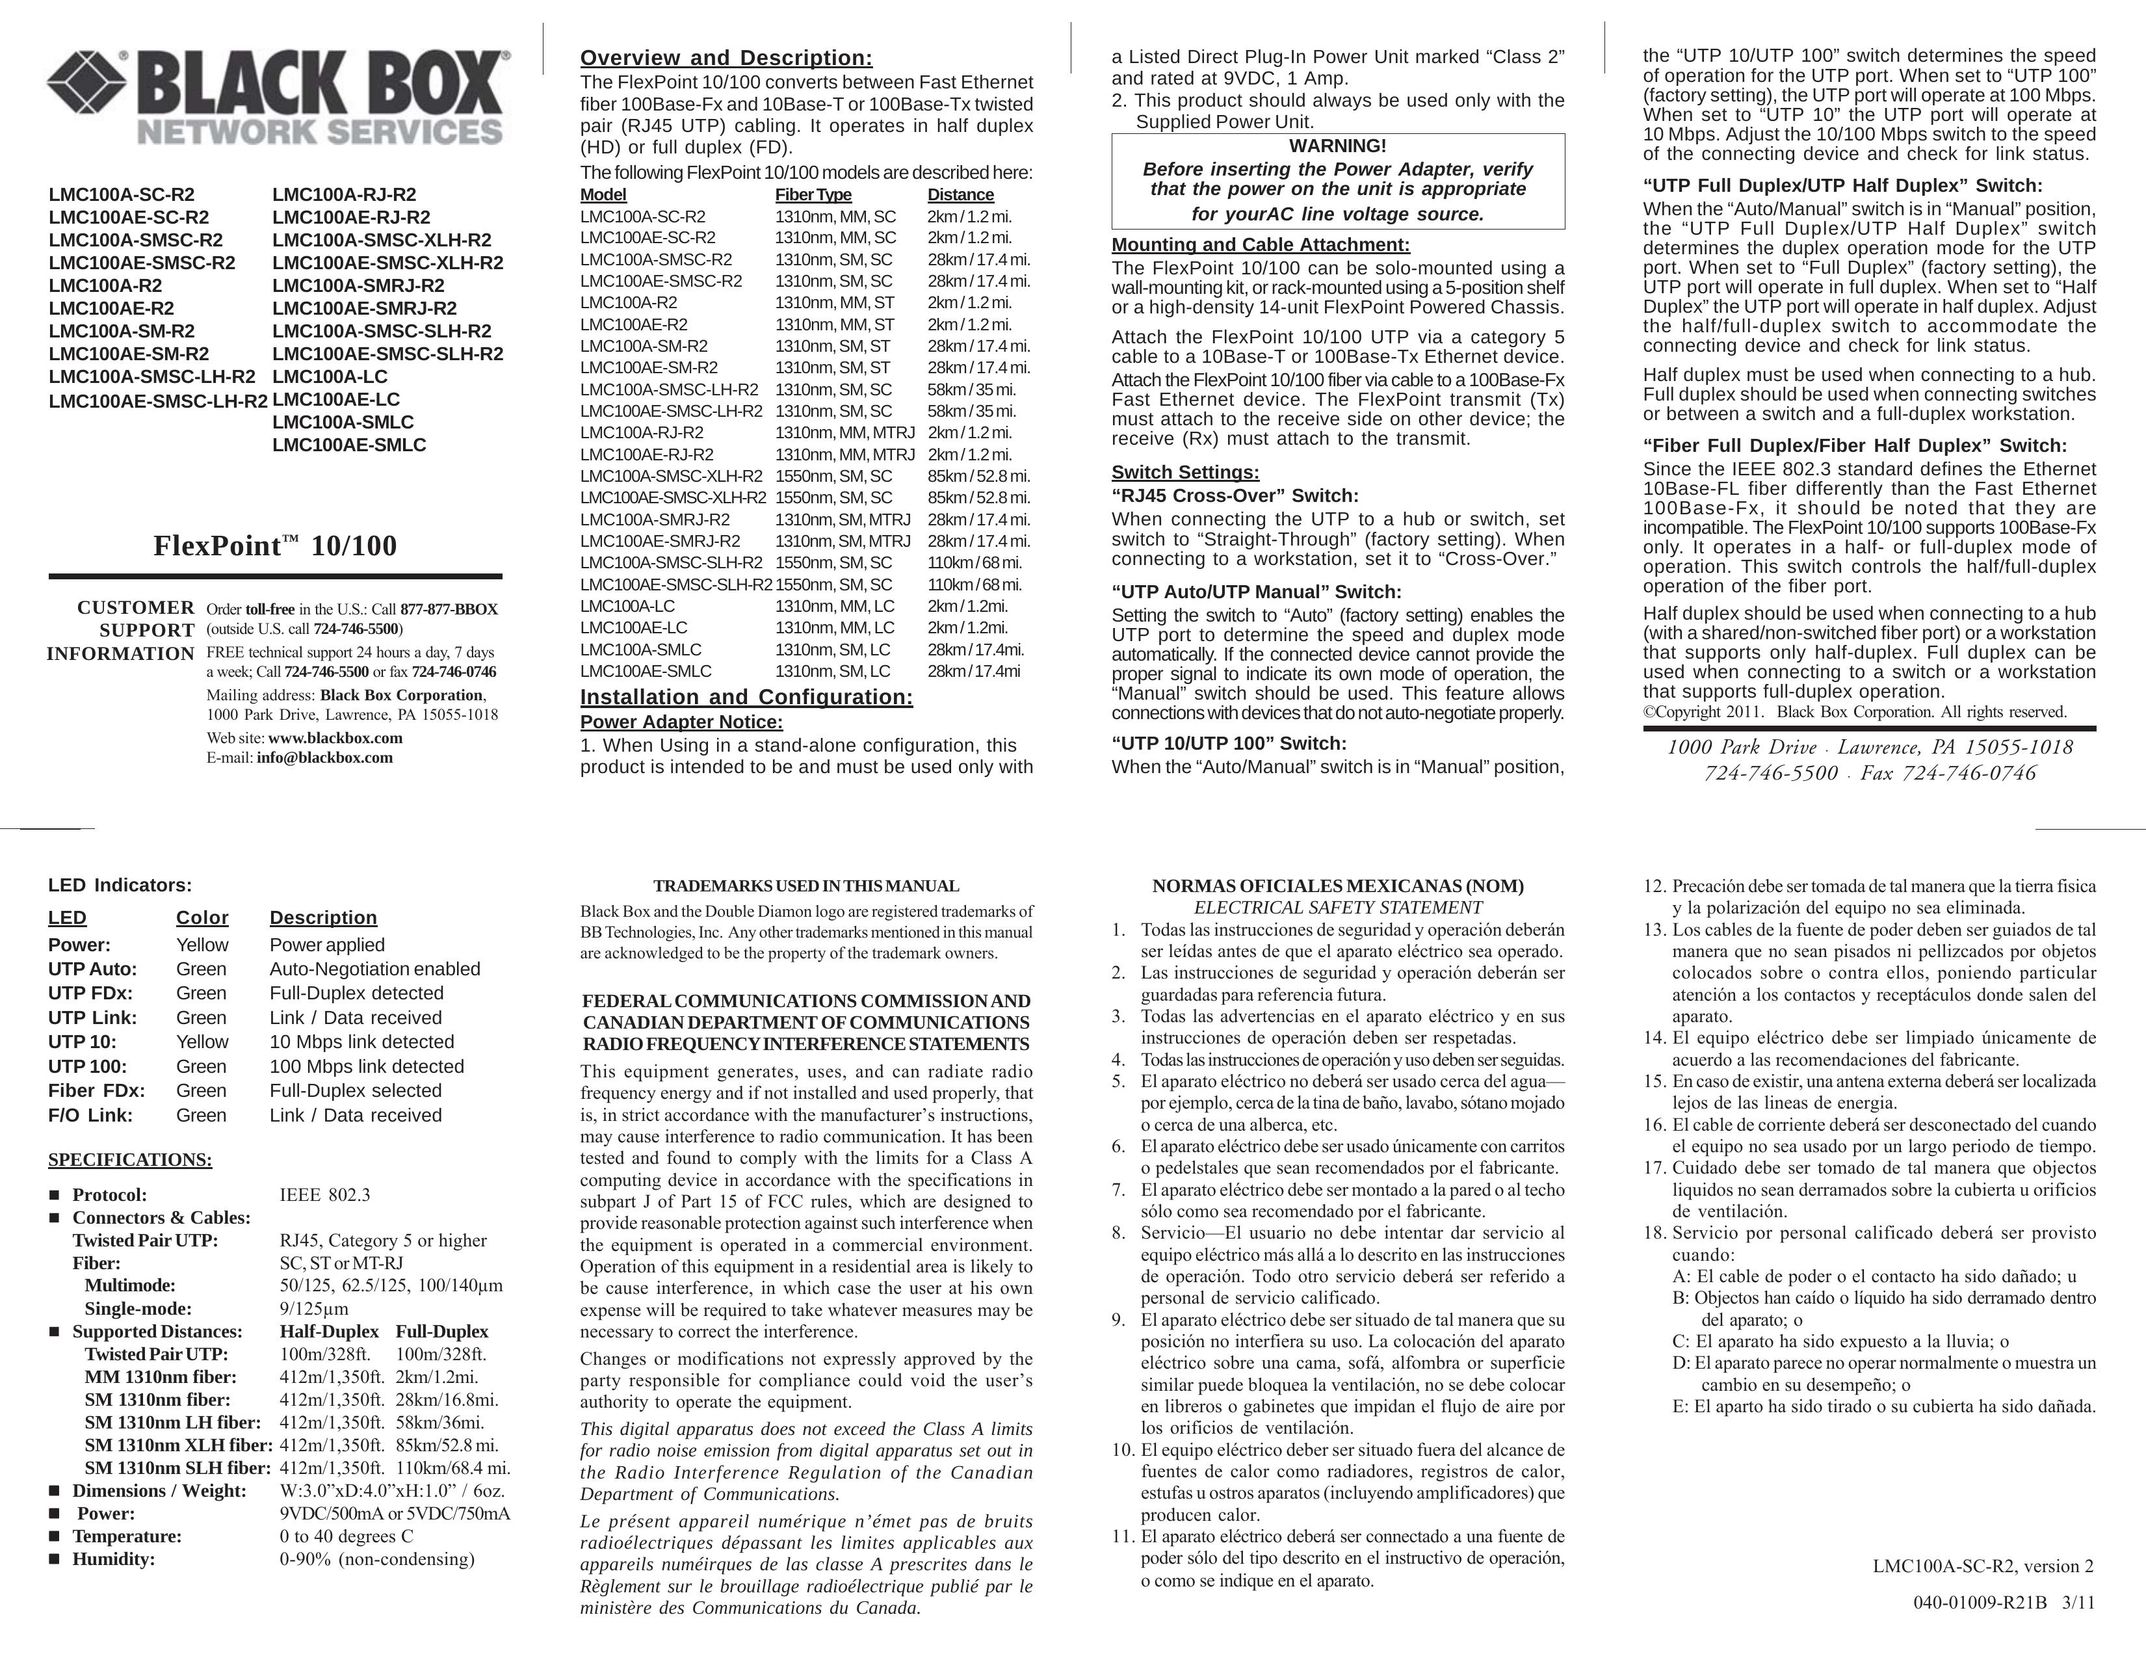 Black Box LMC100A-SMLC Network Cables User Manual